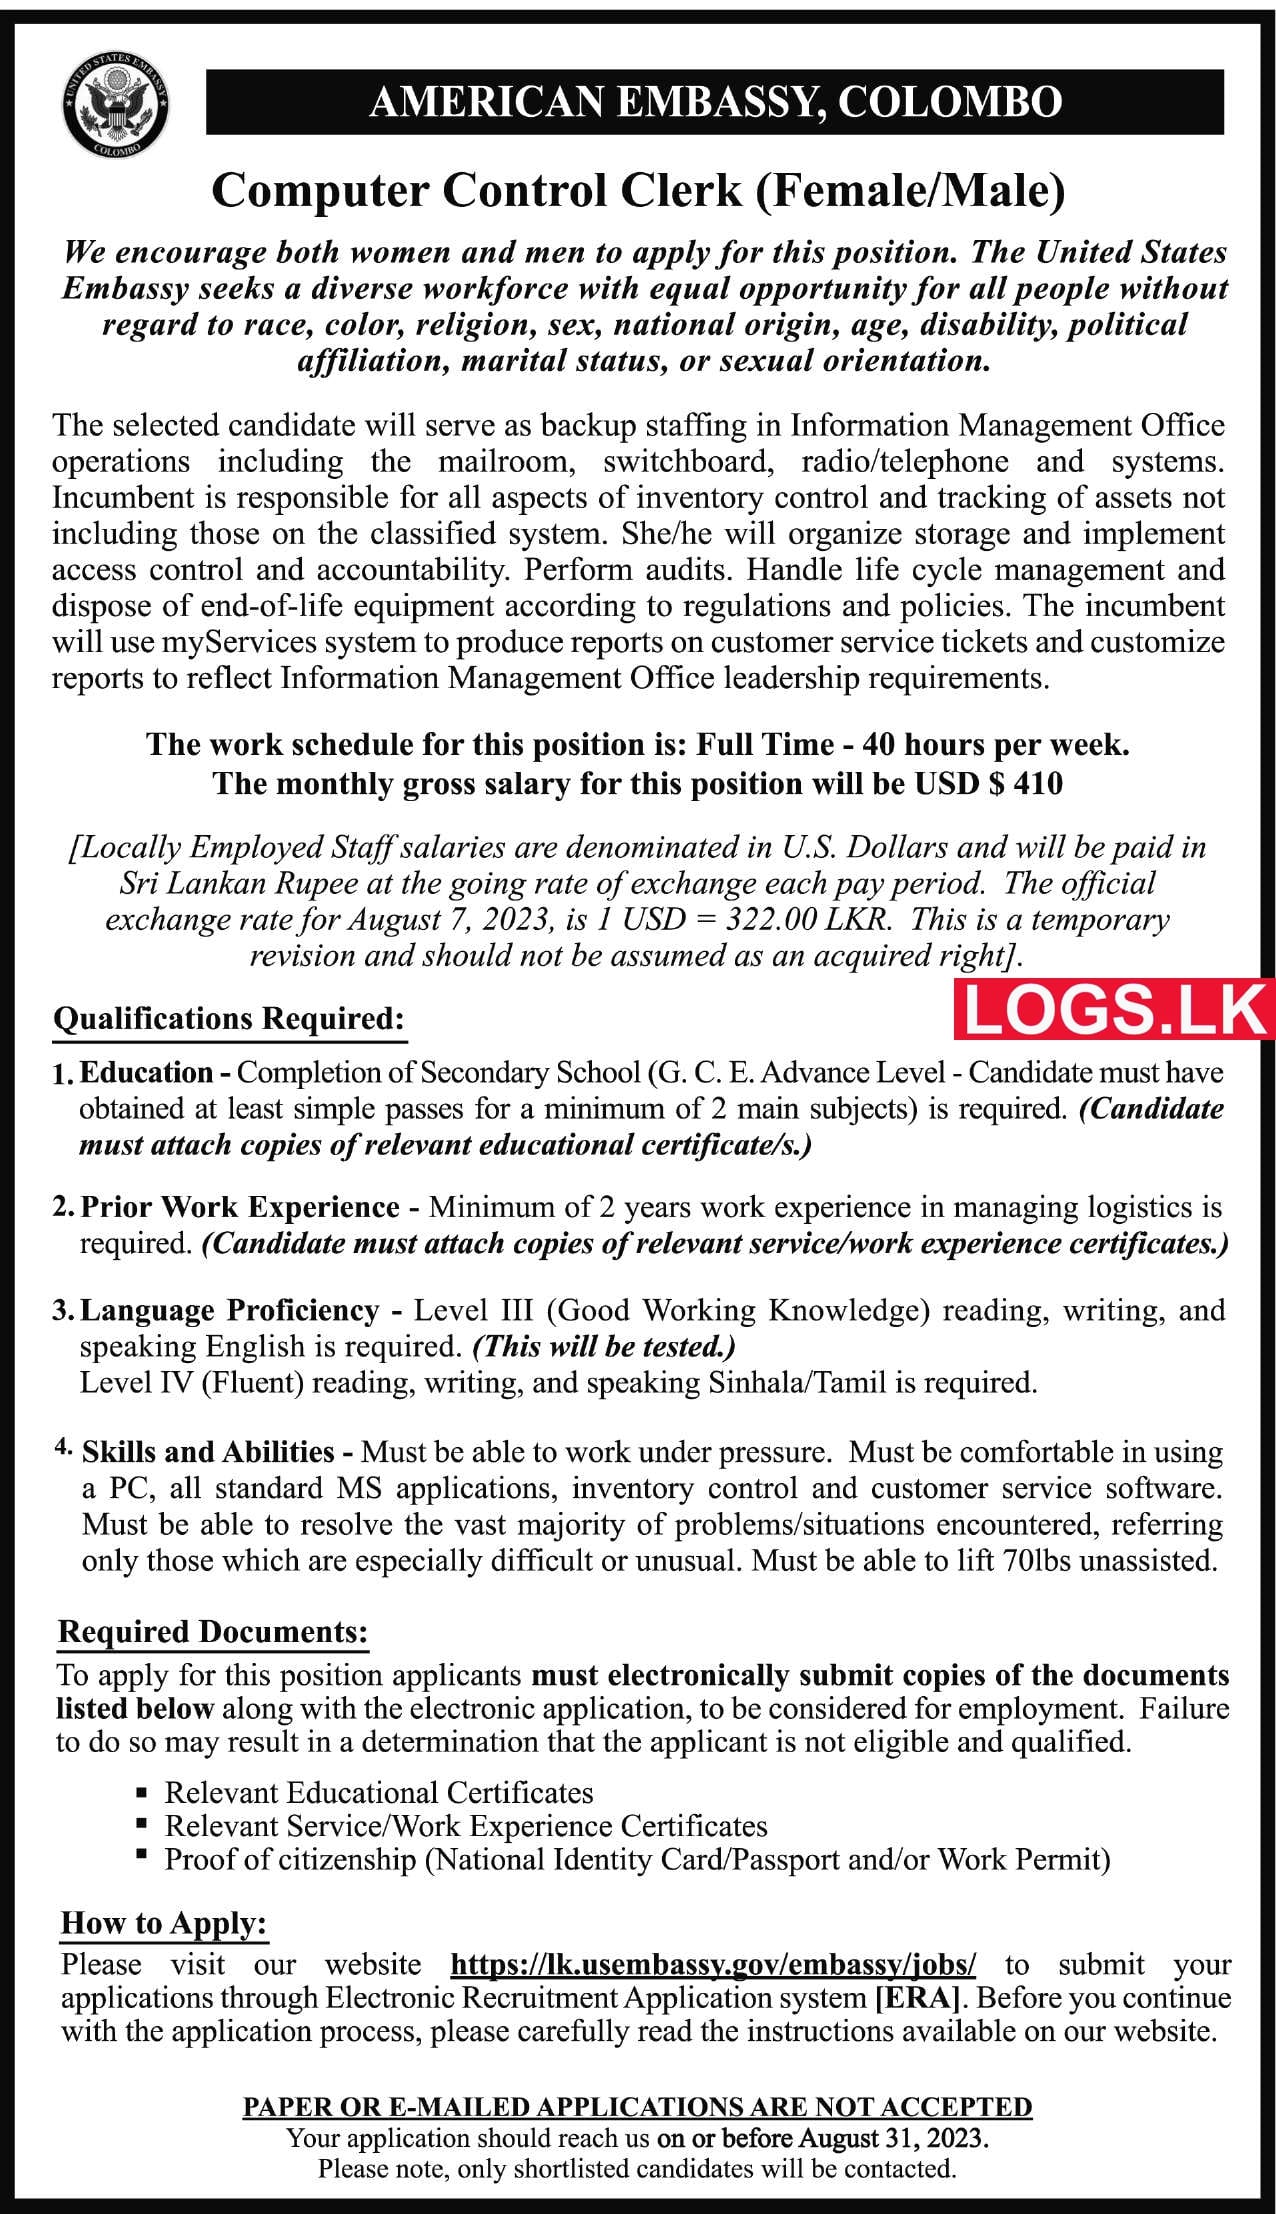 Computer Control Clerk - American Embassy Job Vacancies 2023 Application Form, Details Download. Apply Online US Embassy Vacancy